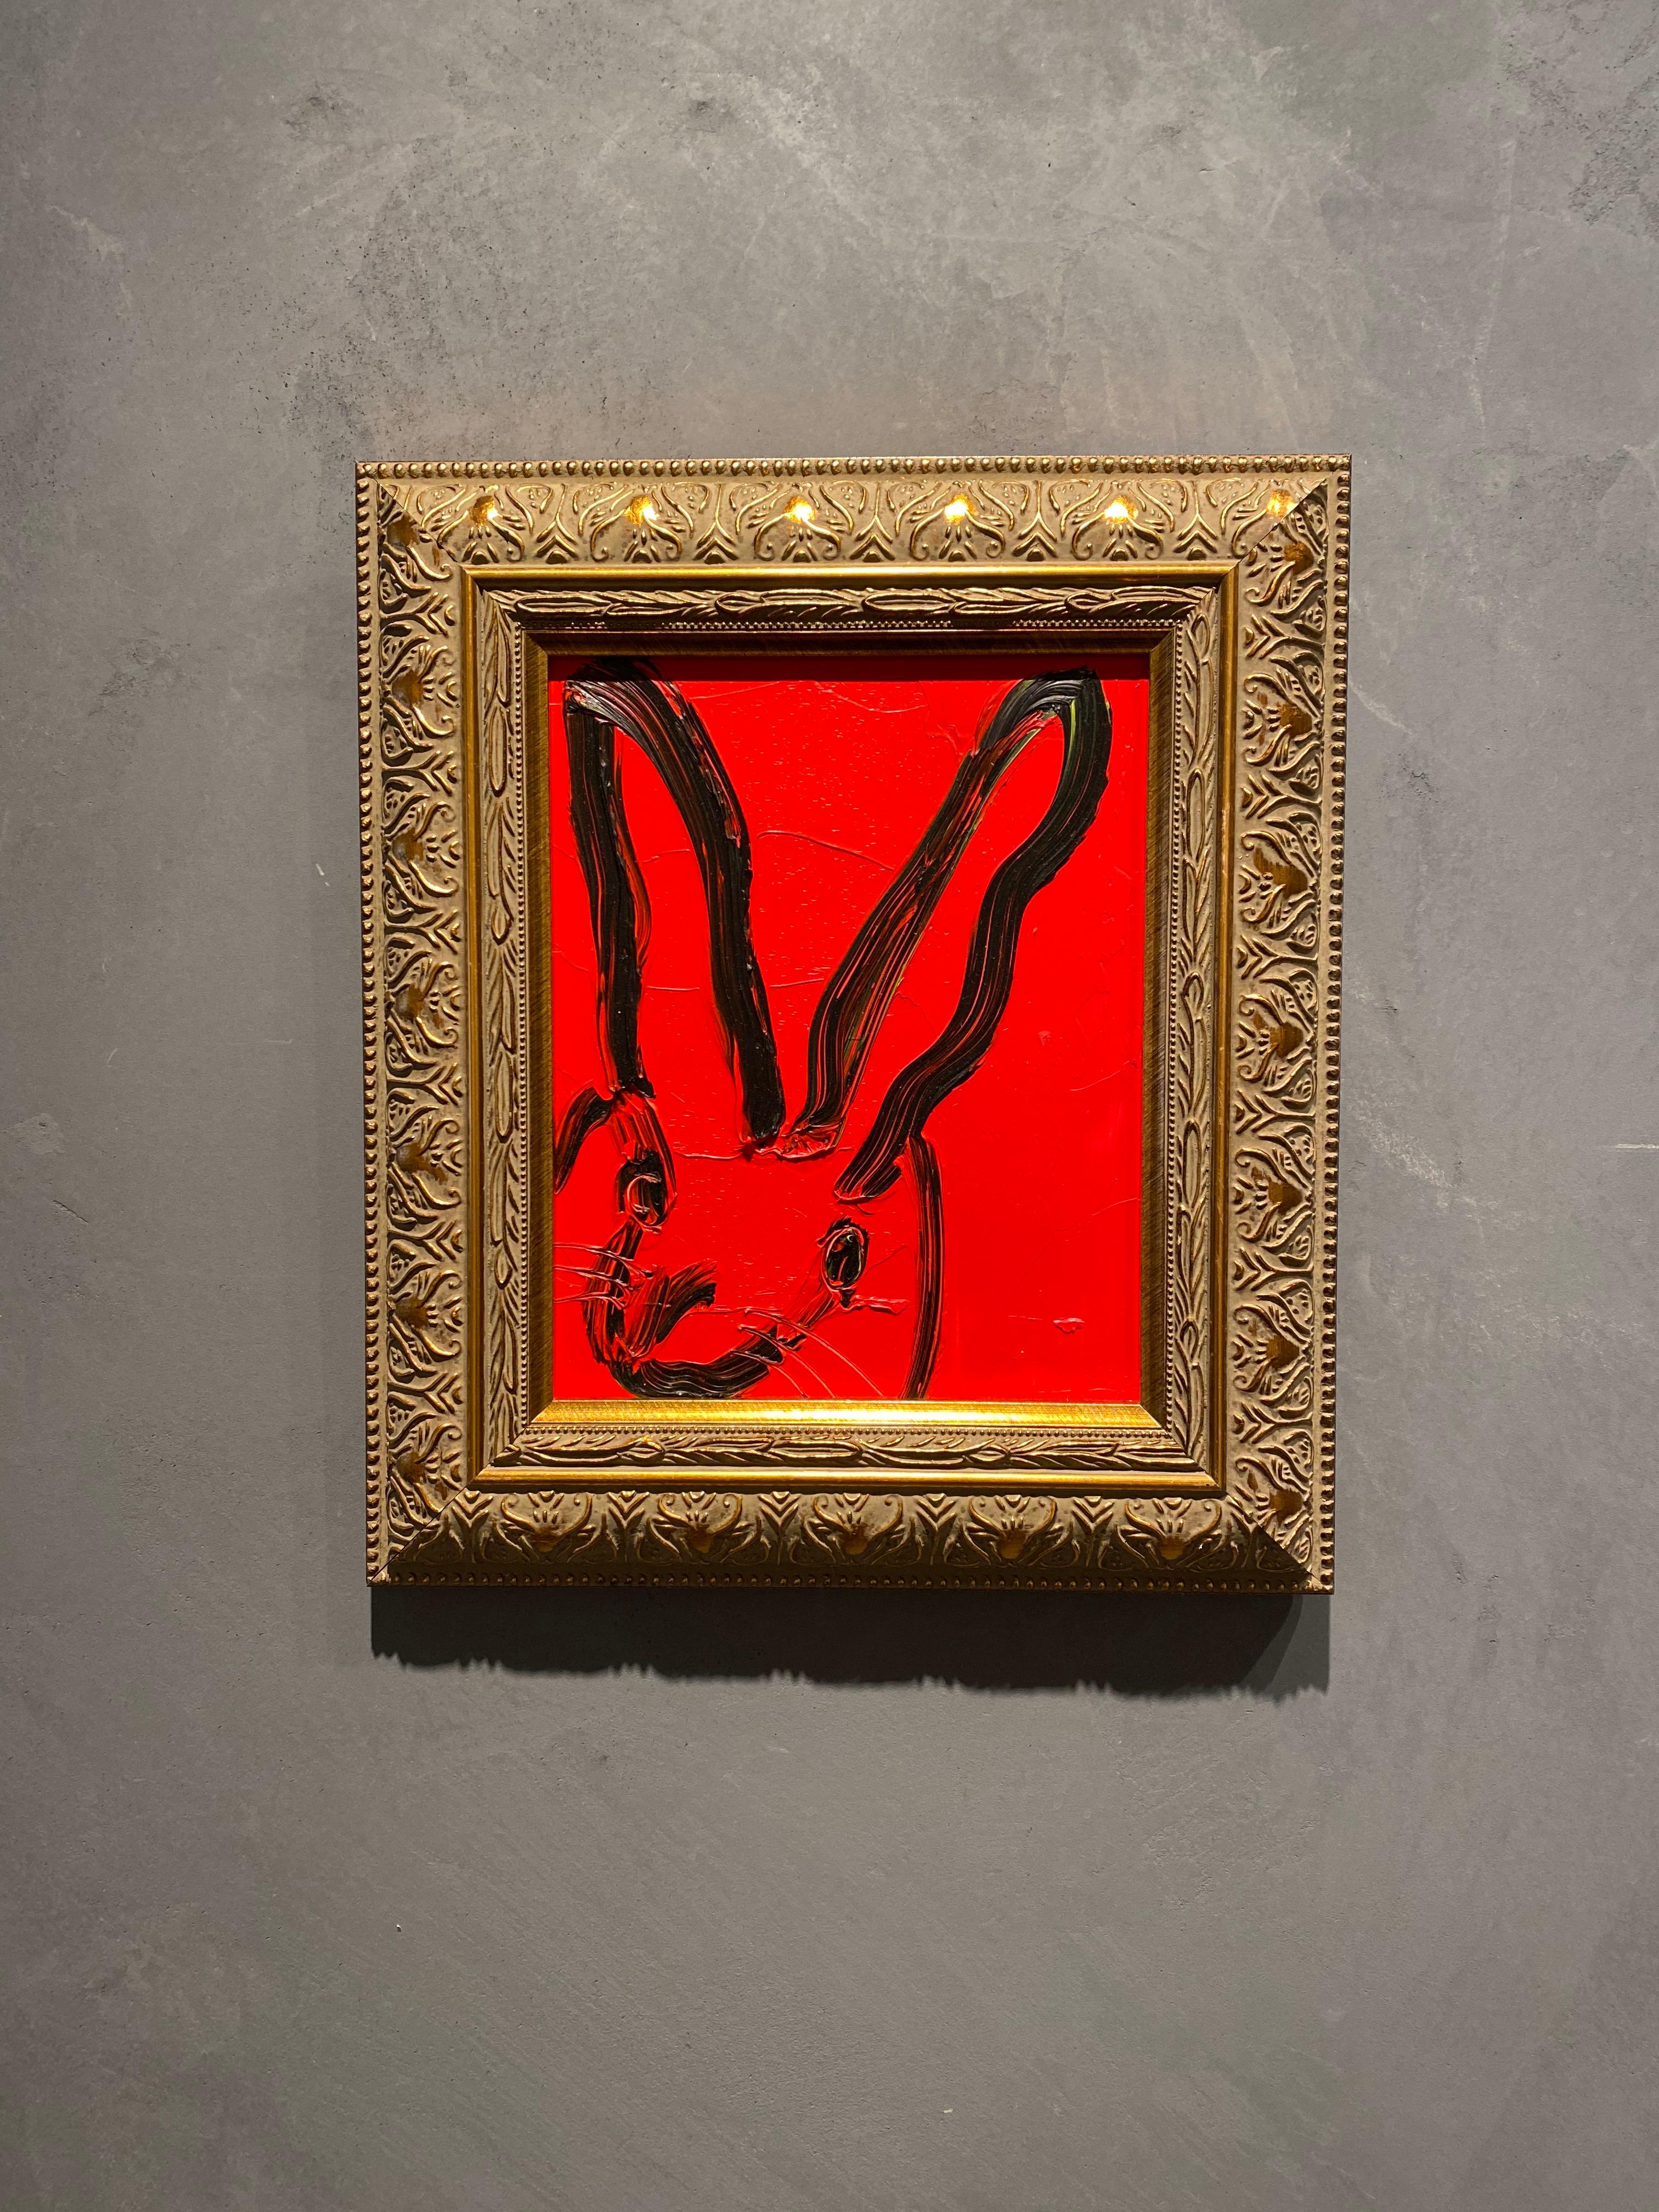 Red- framed gestural oil painting of bunny by Hunt Slonem 1